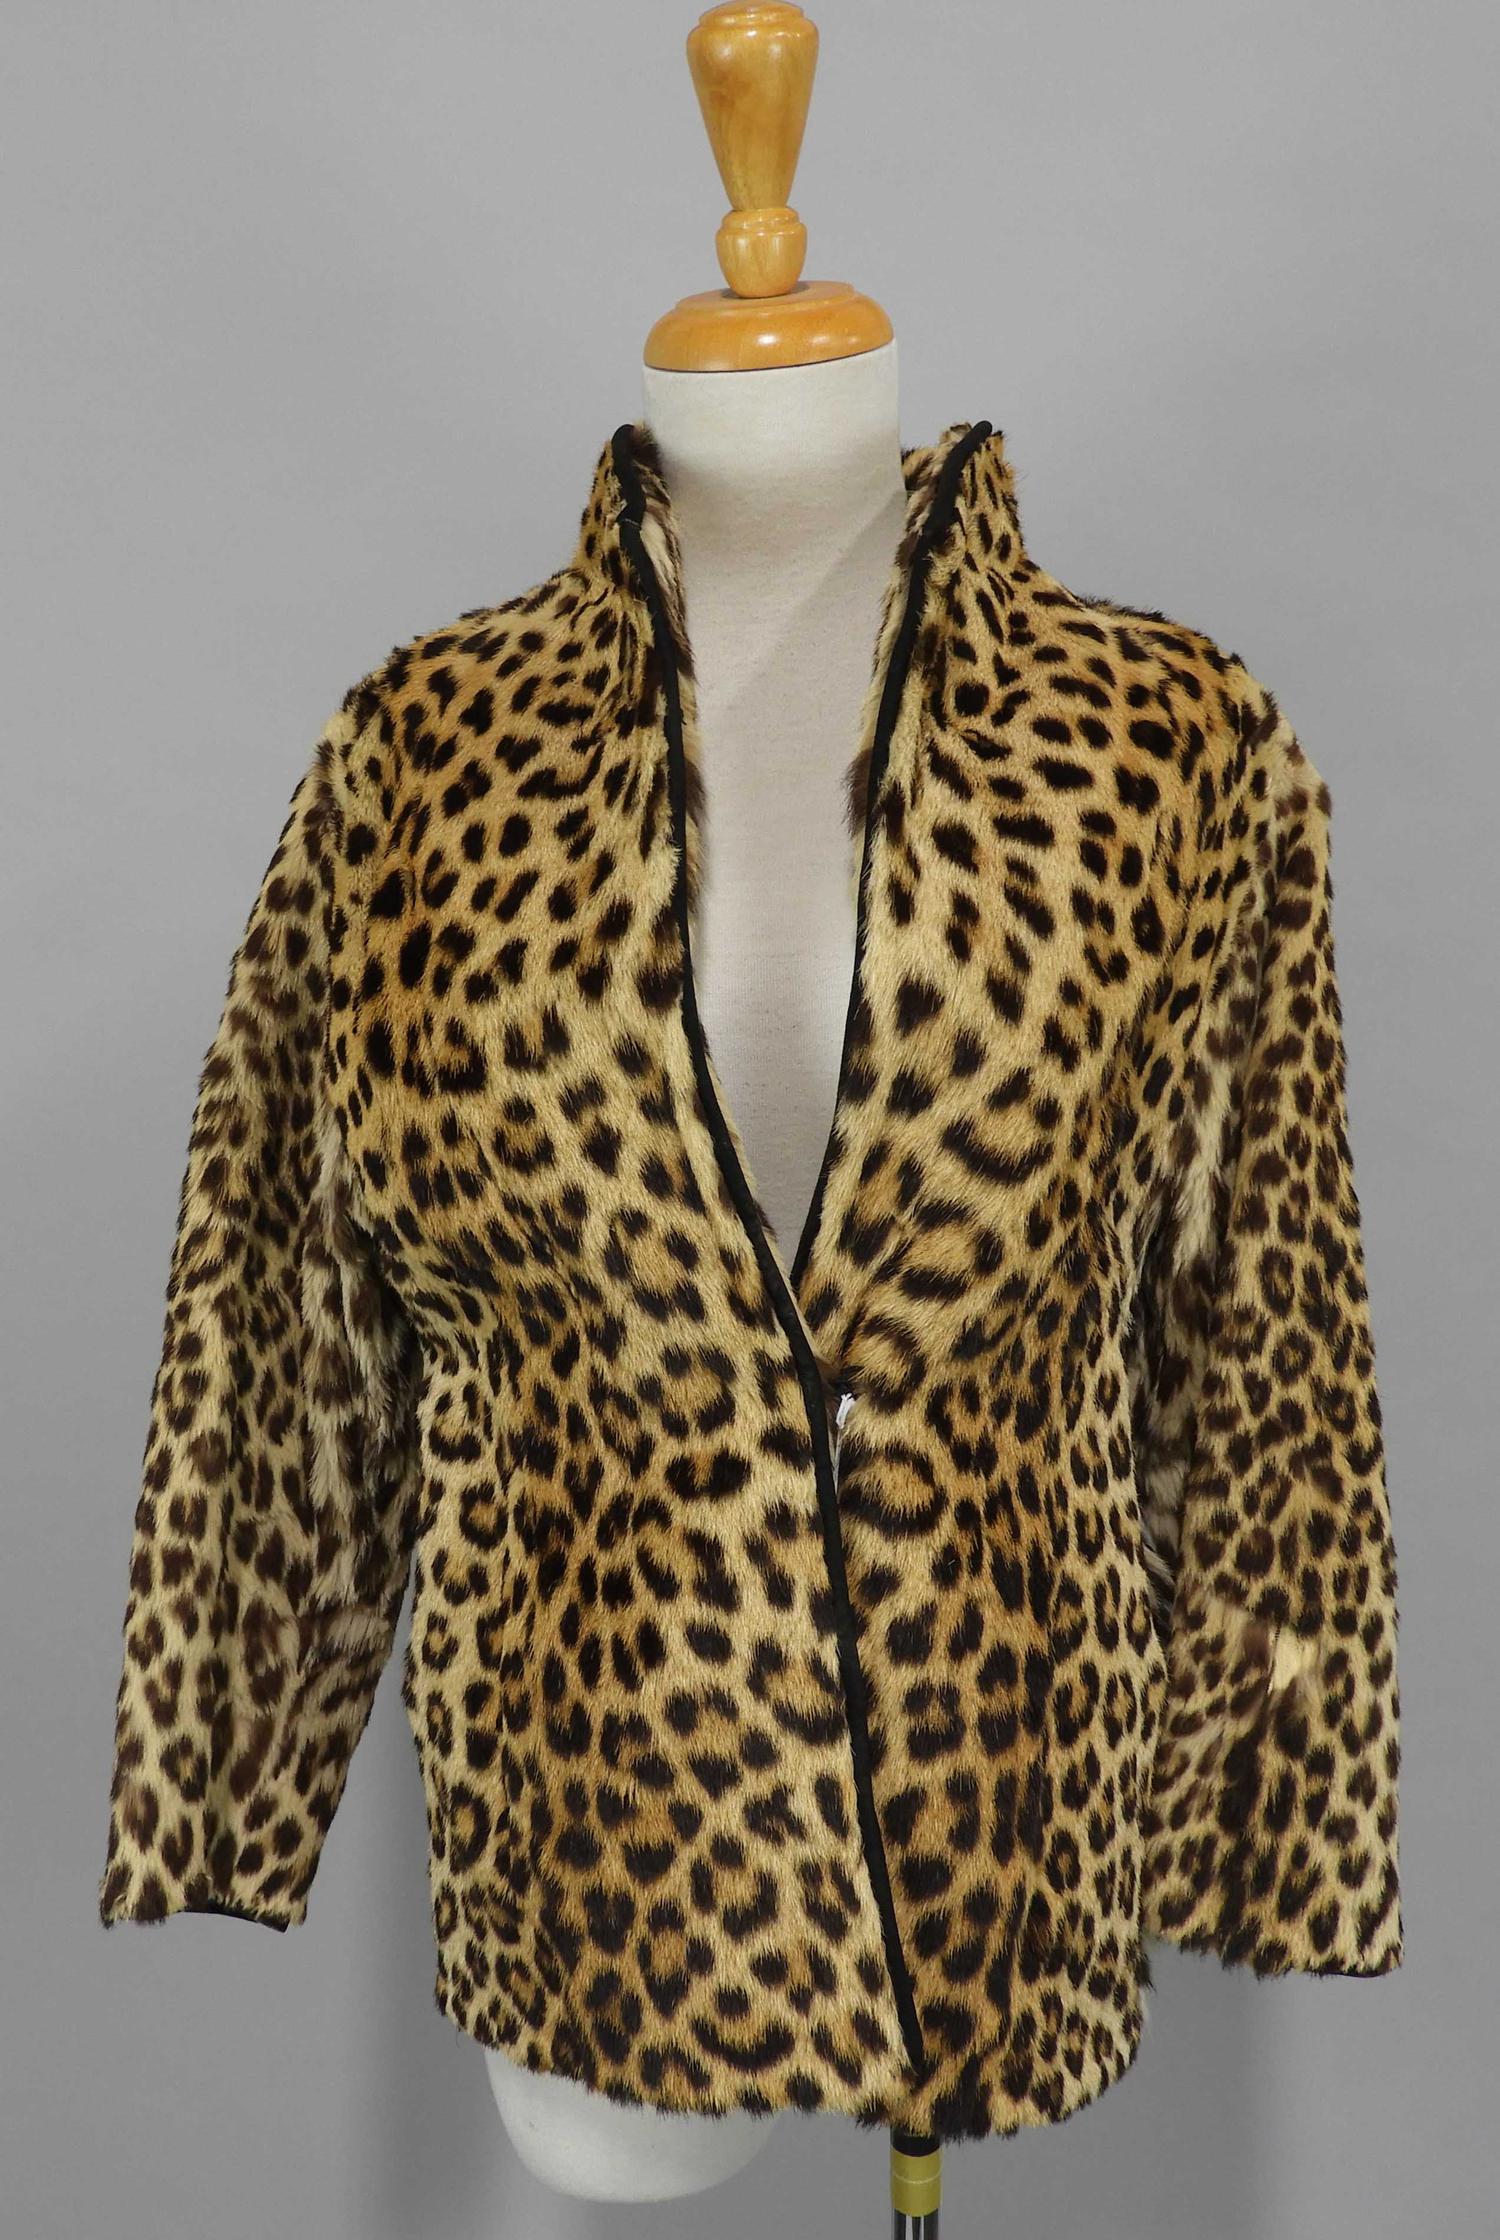 Murrays Auctioneers - Lot 68K: Vintage leopard fur jacket